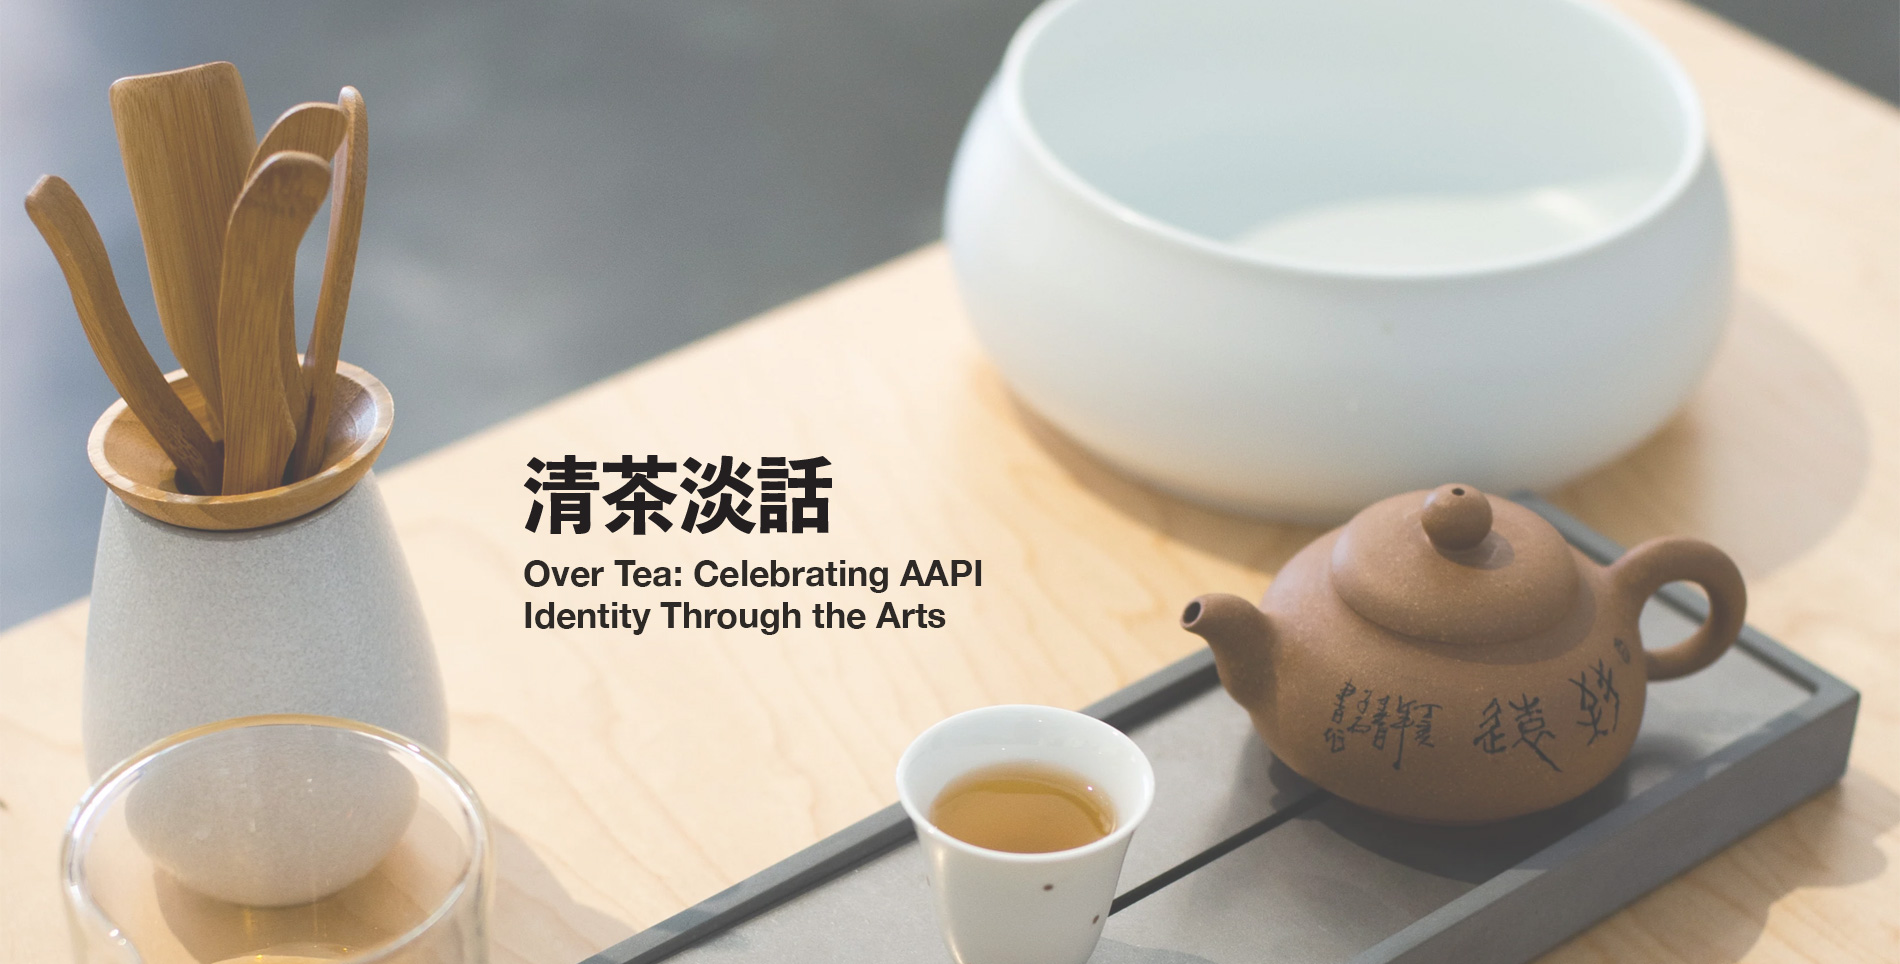 Over Tea: Celebrating AAPI Identity Through the Arts